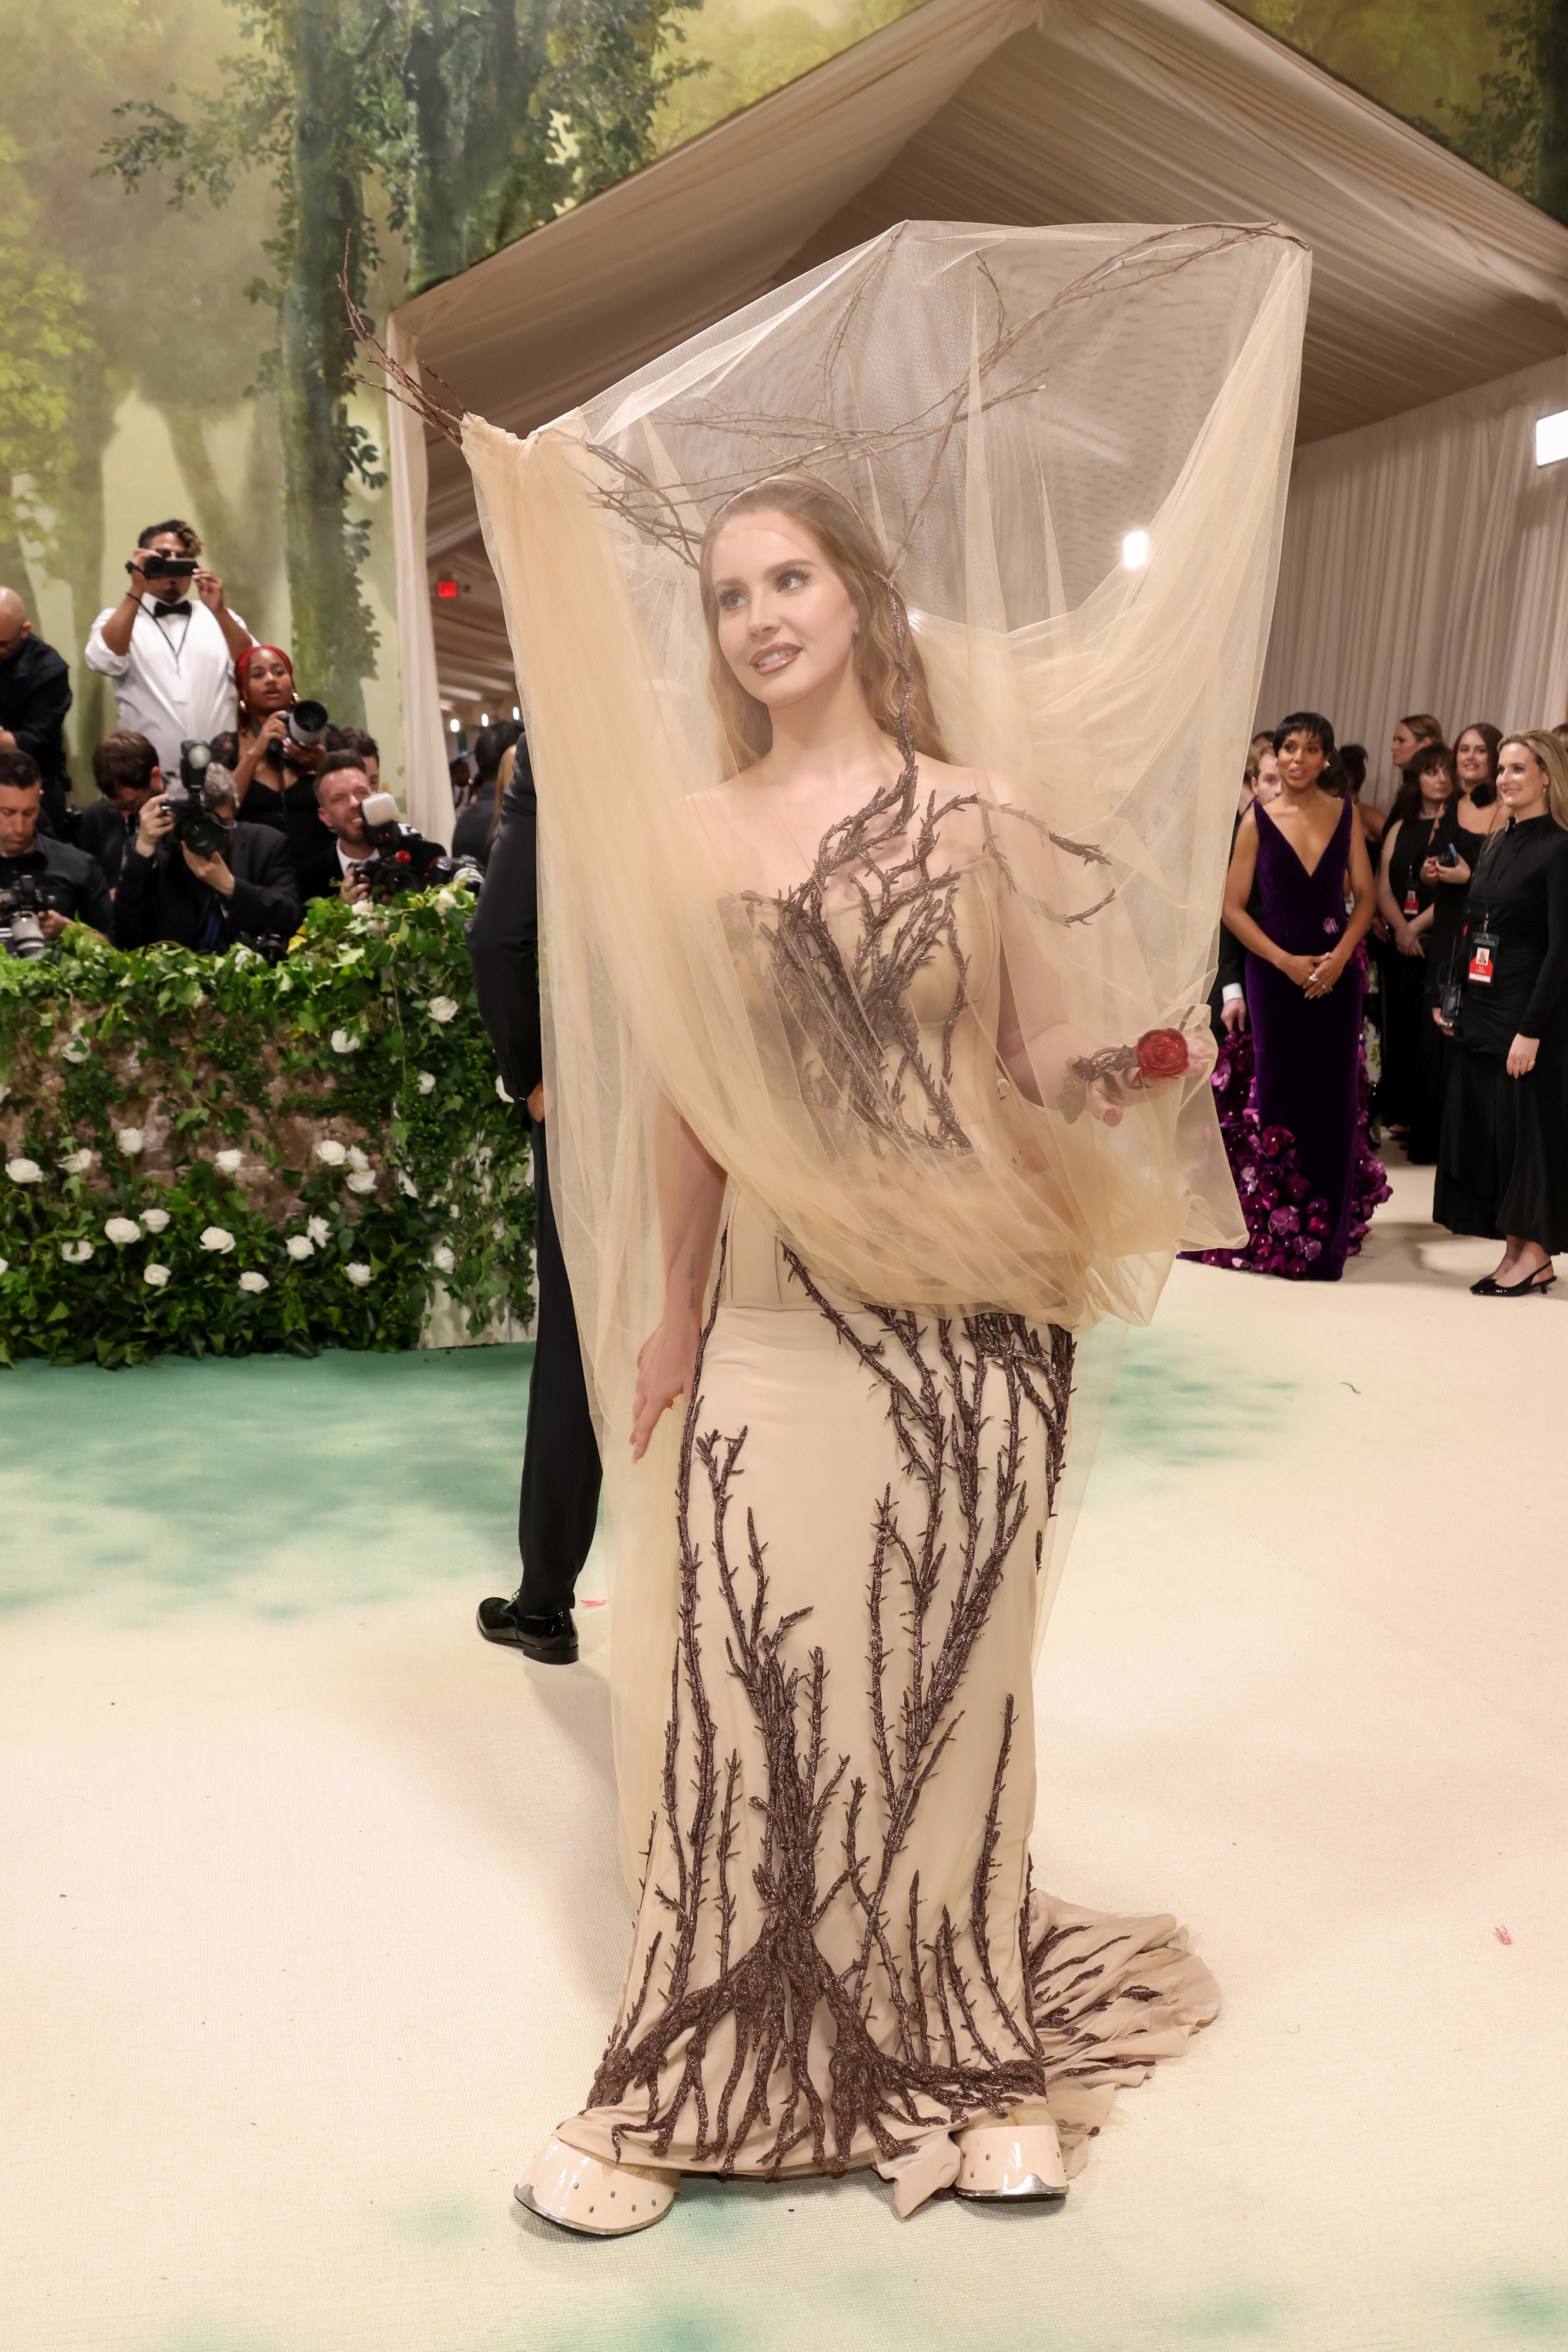 Mujer en evento de gala con vestido transparente con bordados que imitan ramas